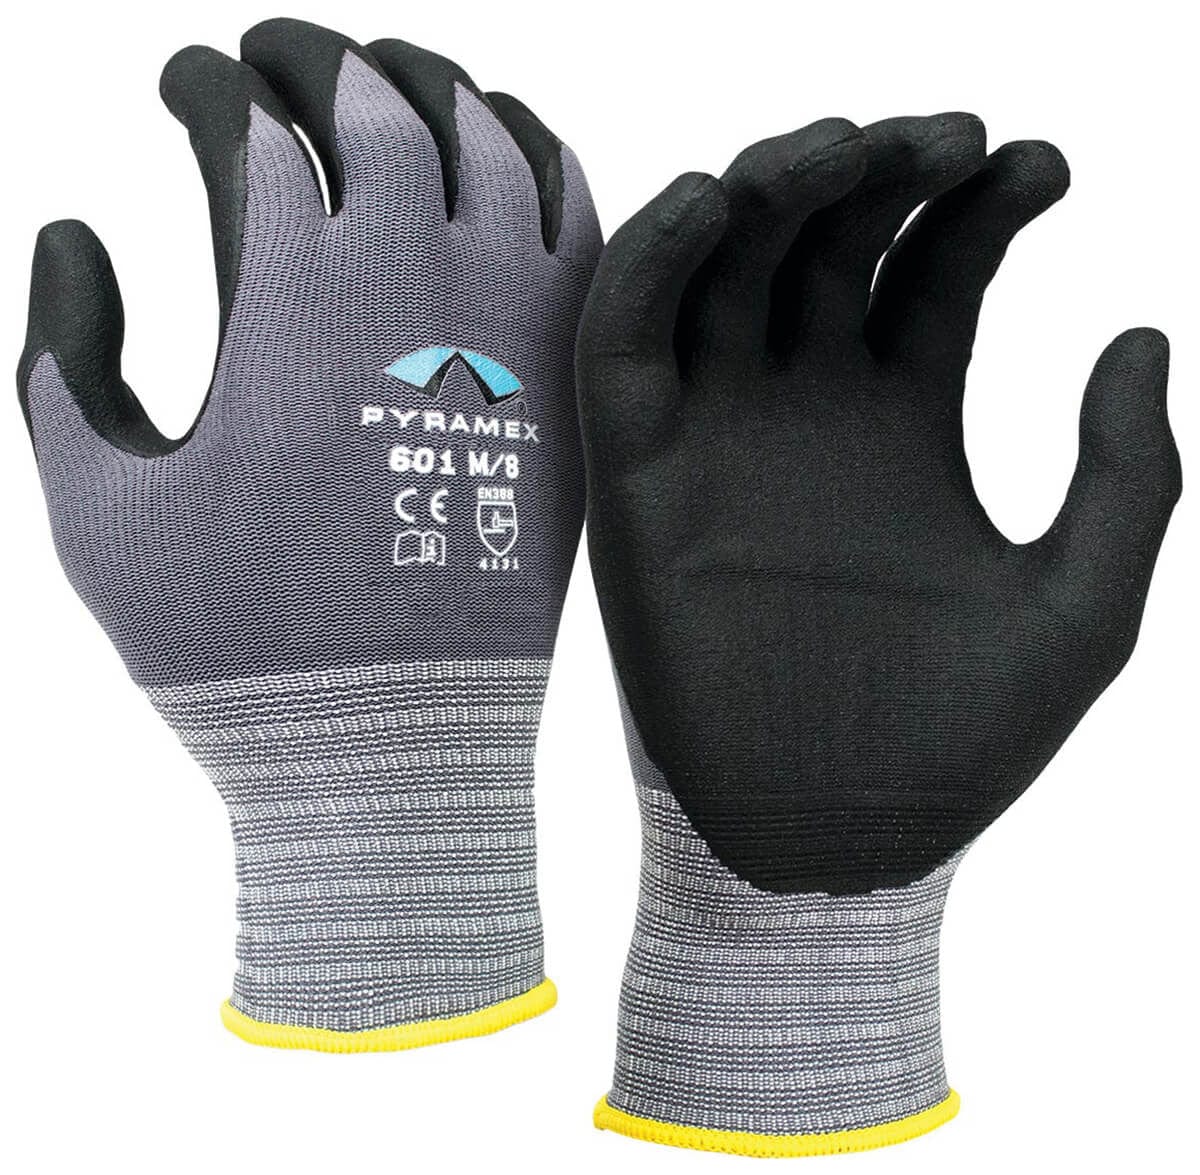 Pyramex GL601 Series Micro-Foam Nitrile Gloves